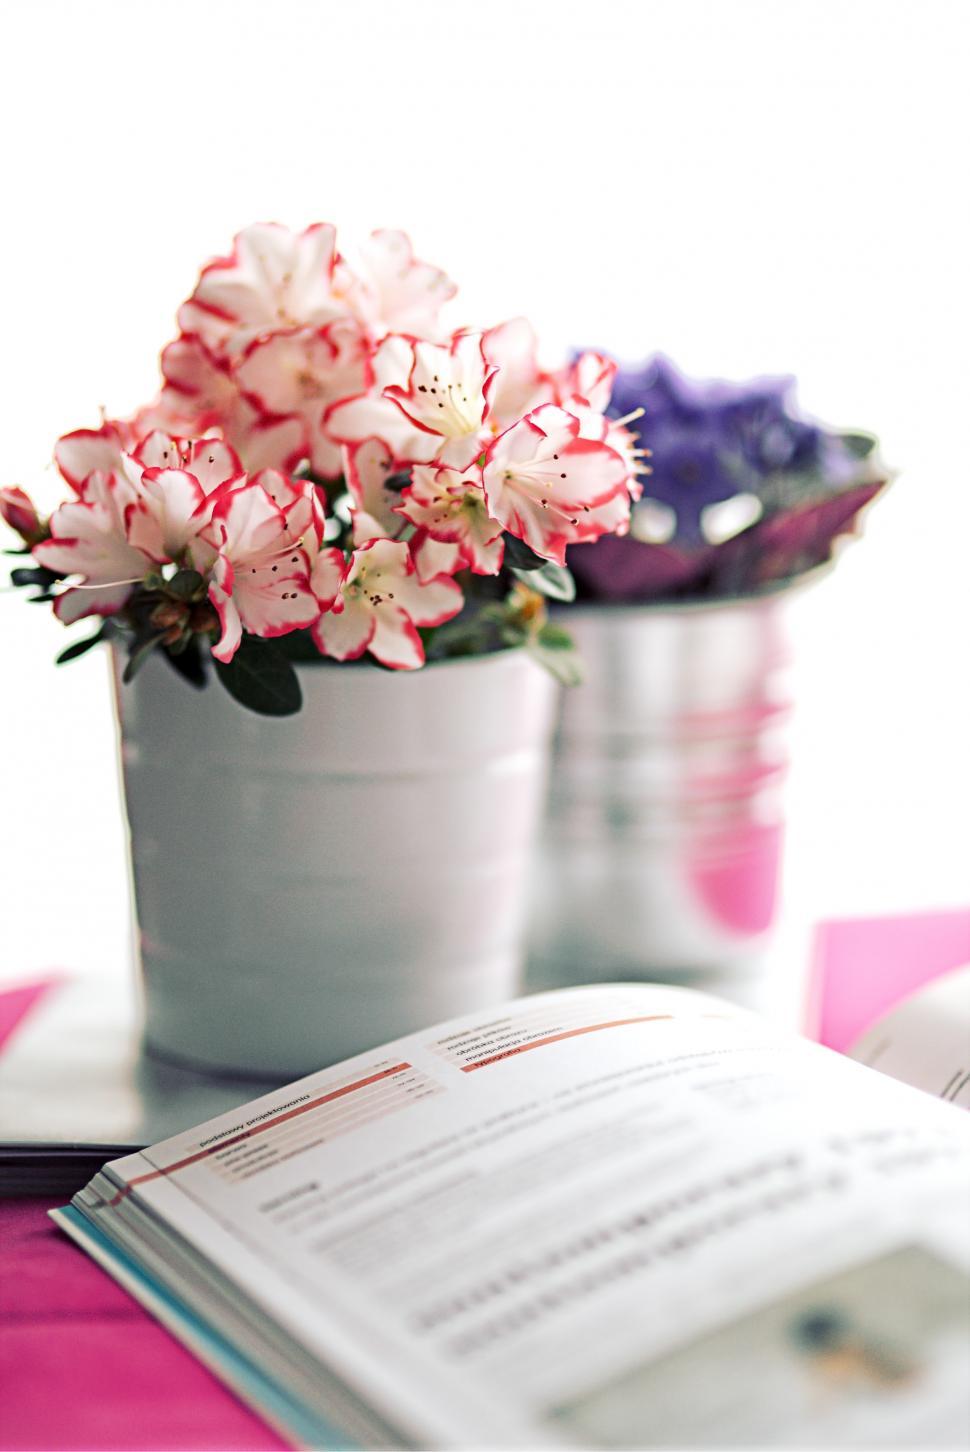 Free Image of Book Flower azalea houseplants whitepot flower flowers 